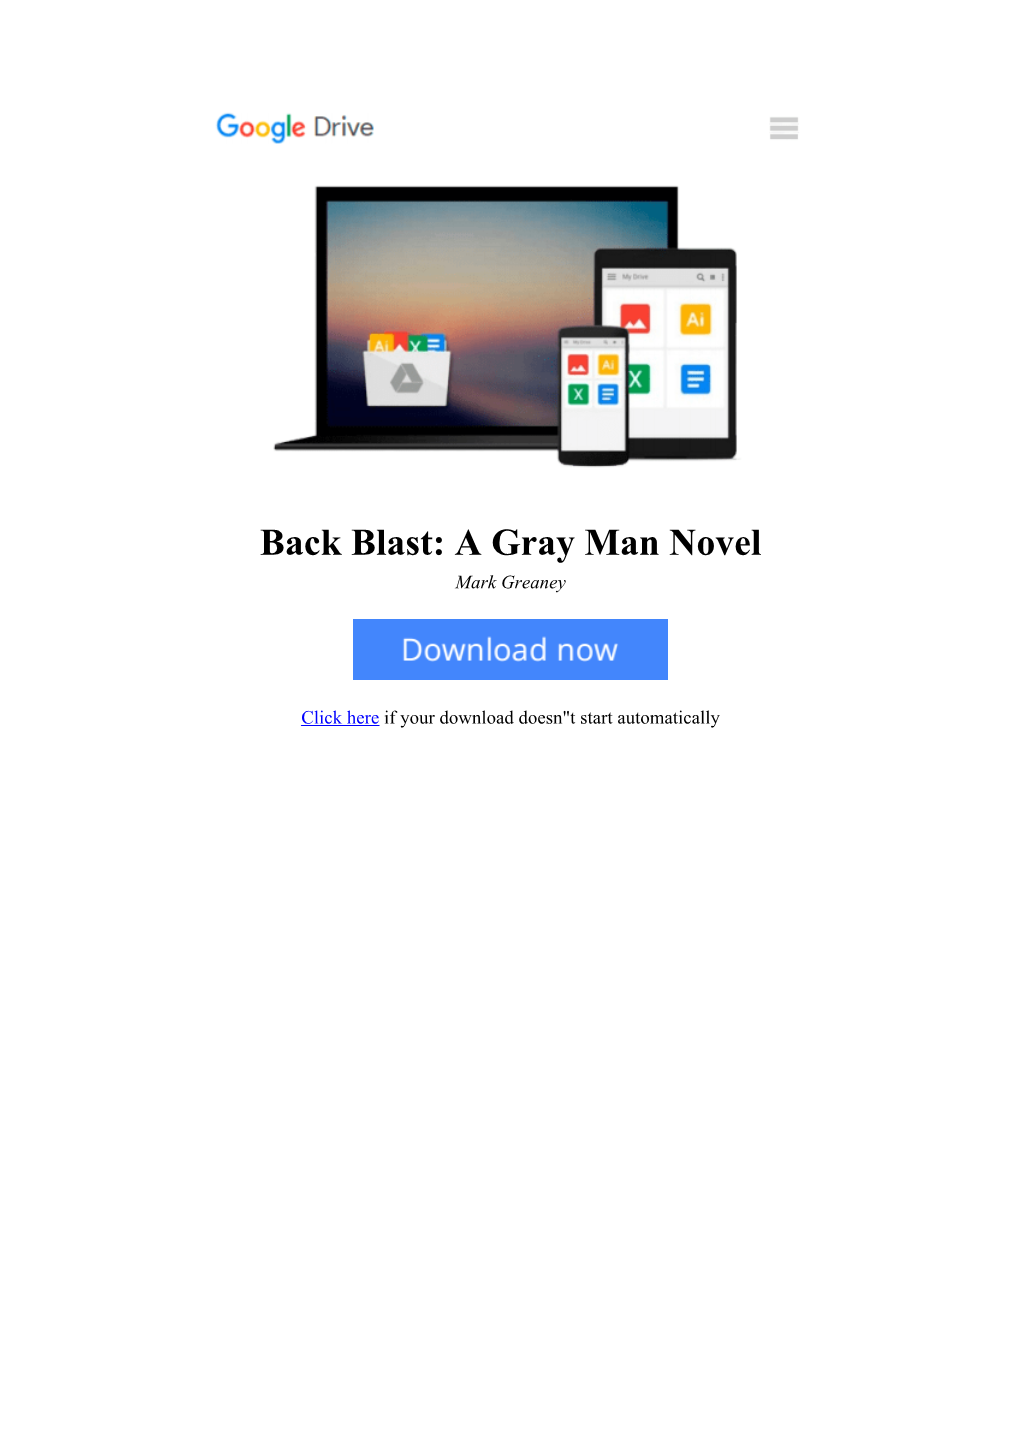 Back Blast: a Gray Man Novel by Mark Greaney #VCLMBETNYQ3 #Free